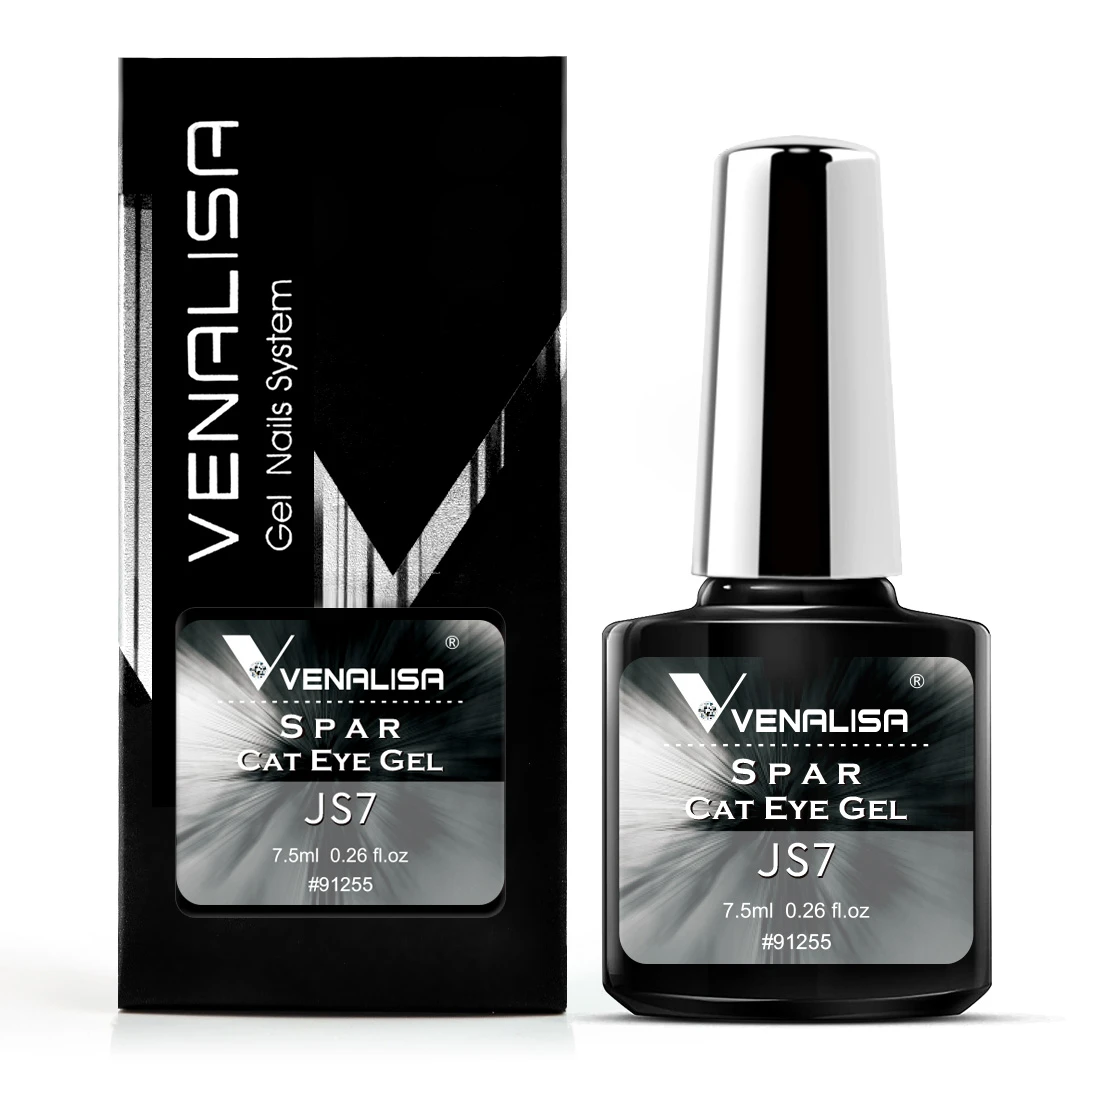 Venalisa Transparent Gel Polish Varnishes Hybrid Nails For Manicure 7.5ml Ice Spar Cat Eyes Soak off Enamel UV Gel Nail Polish